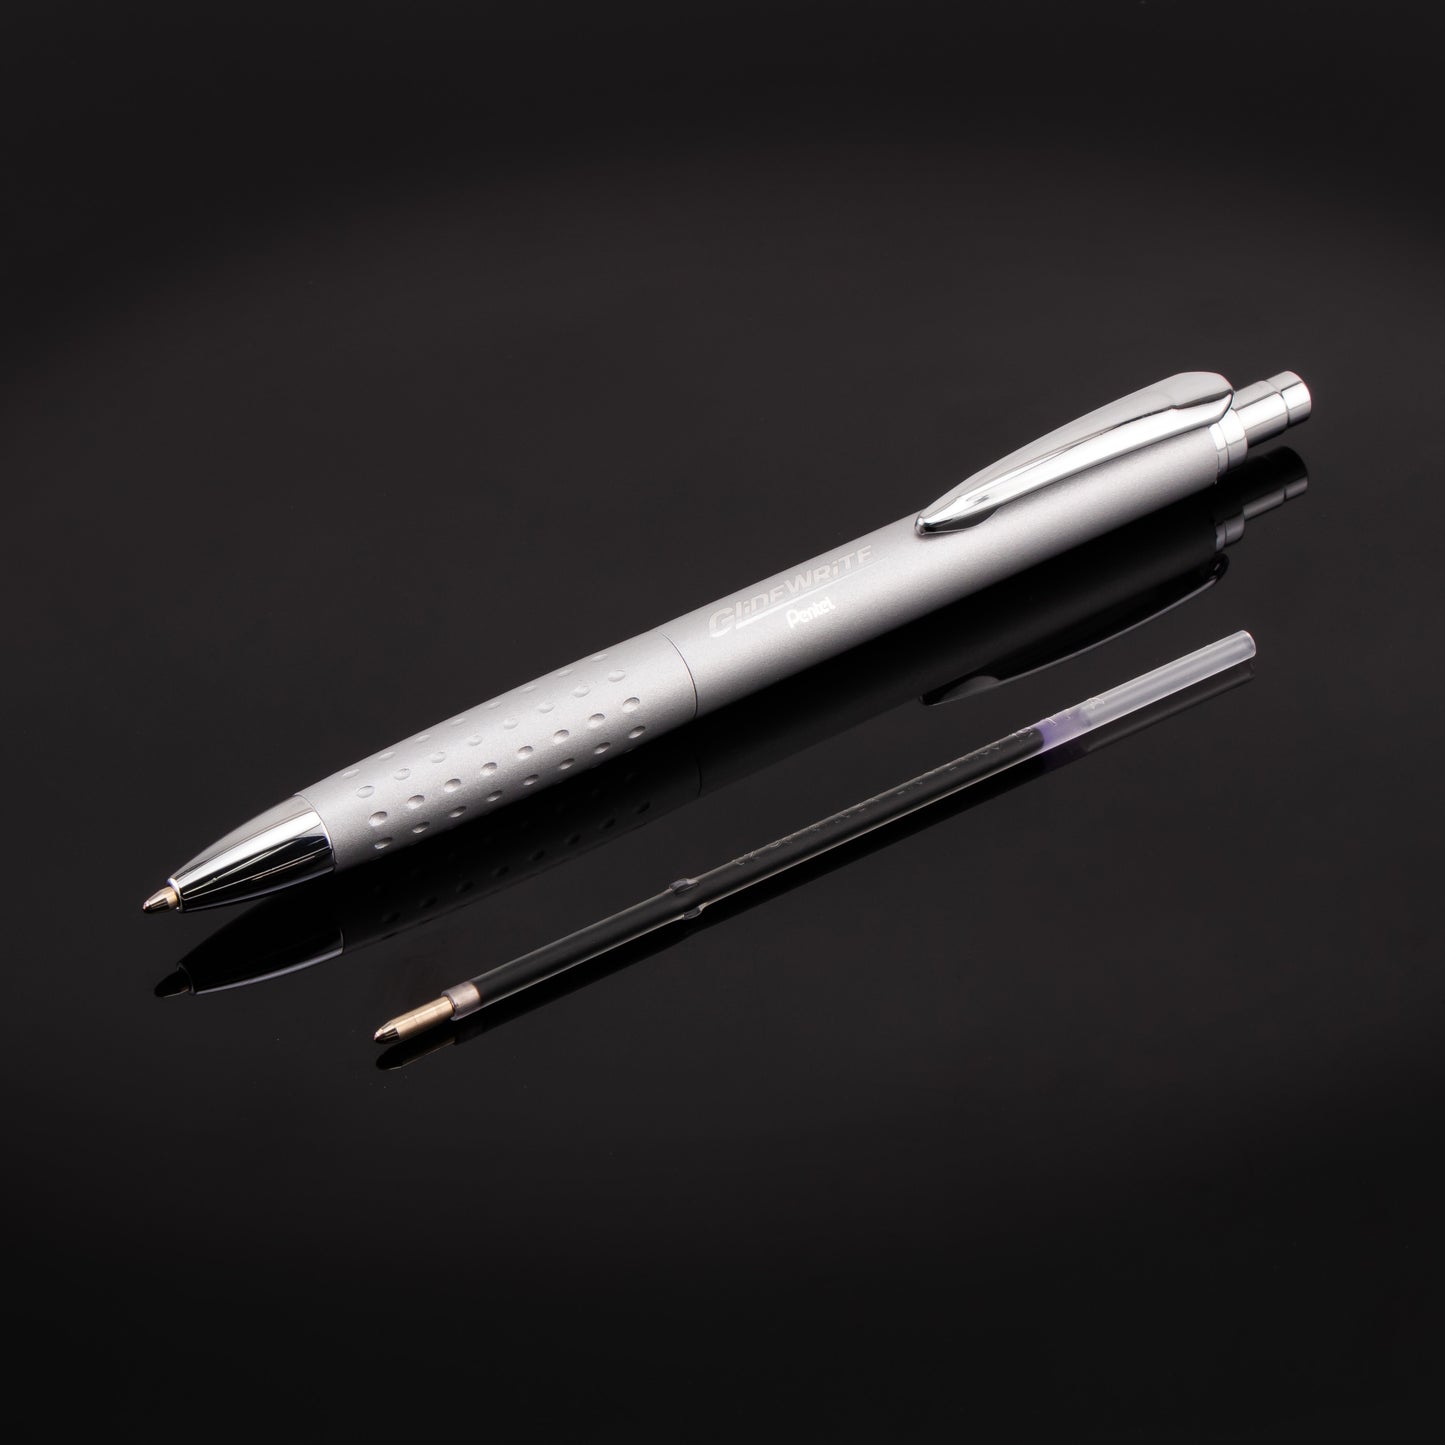 GlideWrite Executive Ballpoint Pen